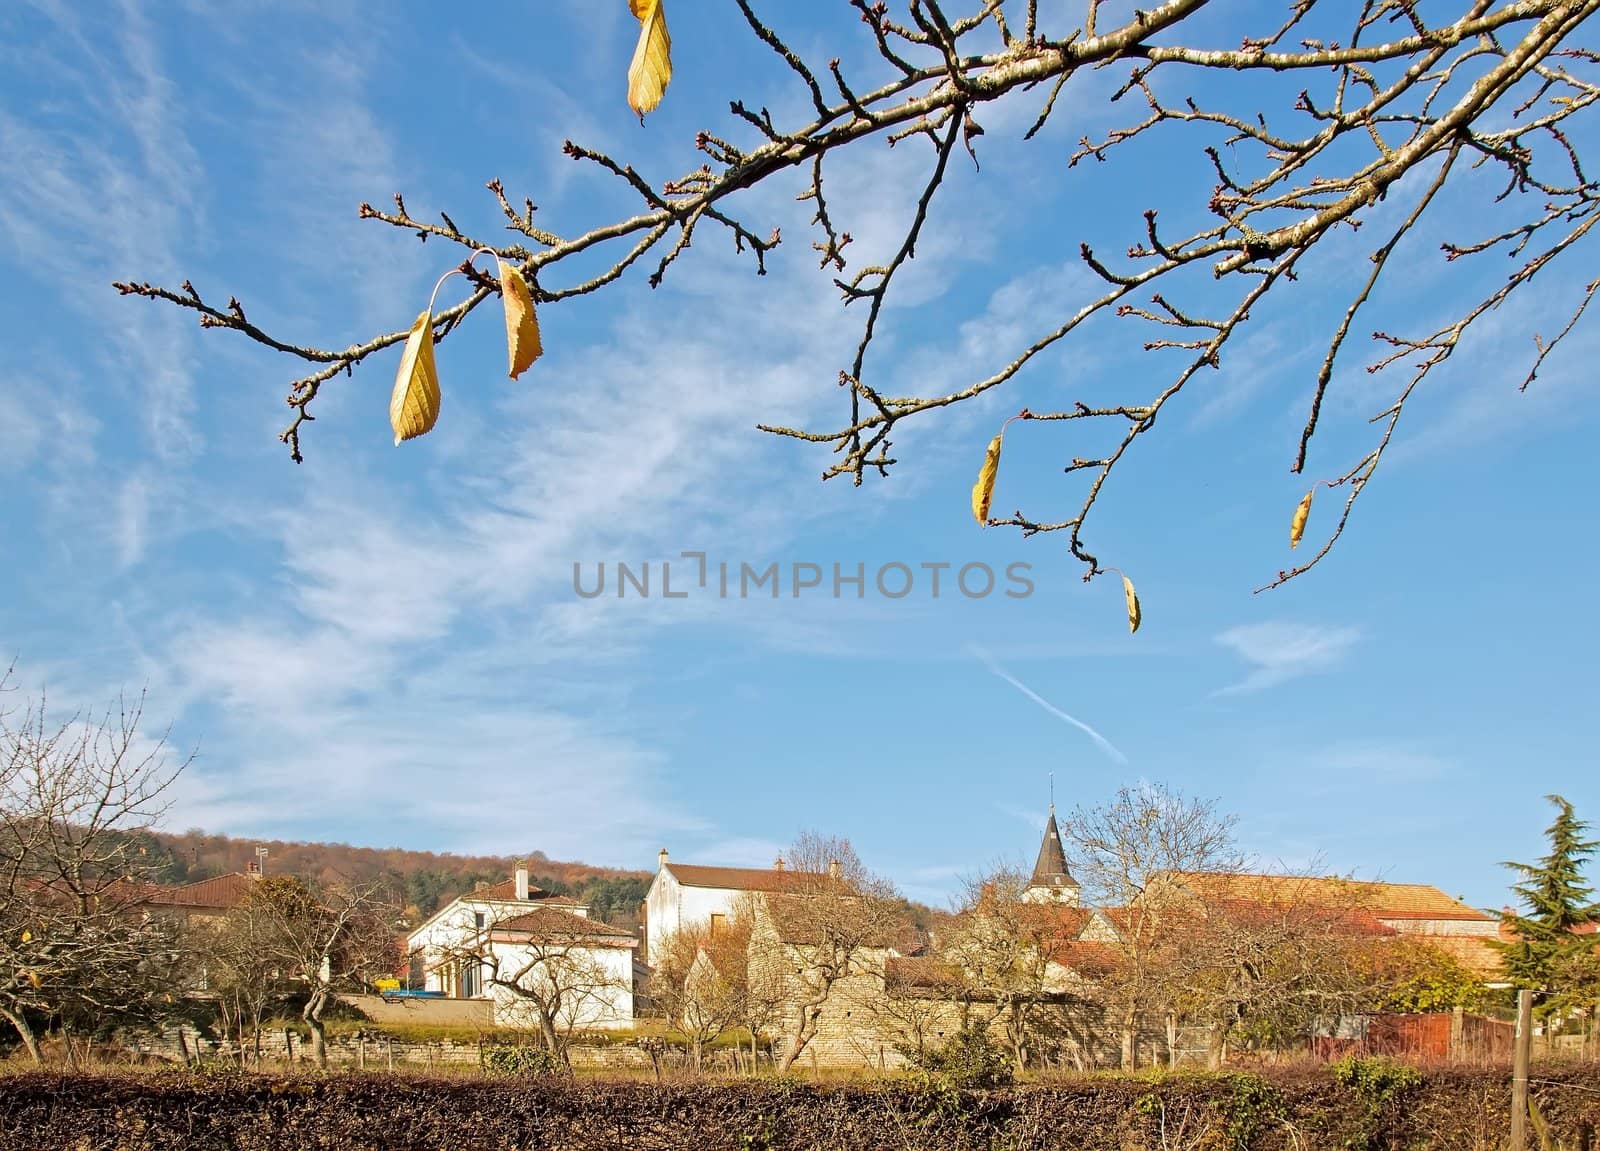 country village in Burgundy France by neko92vl